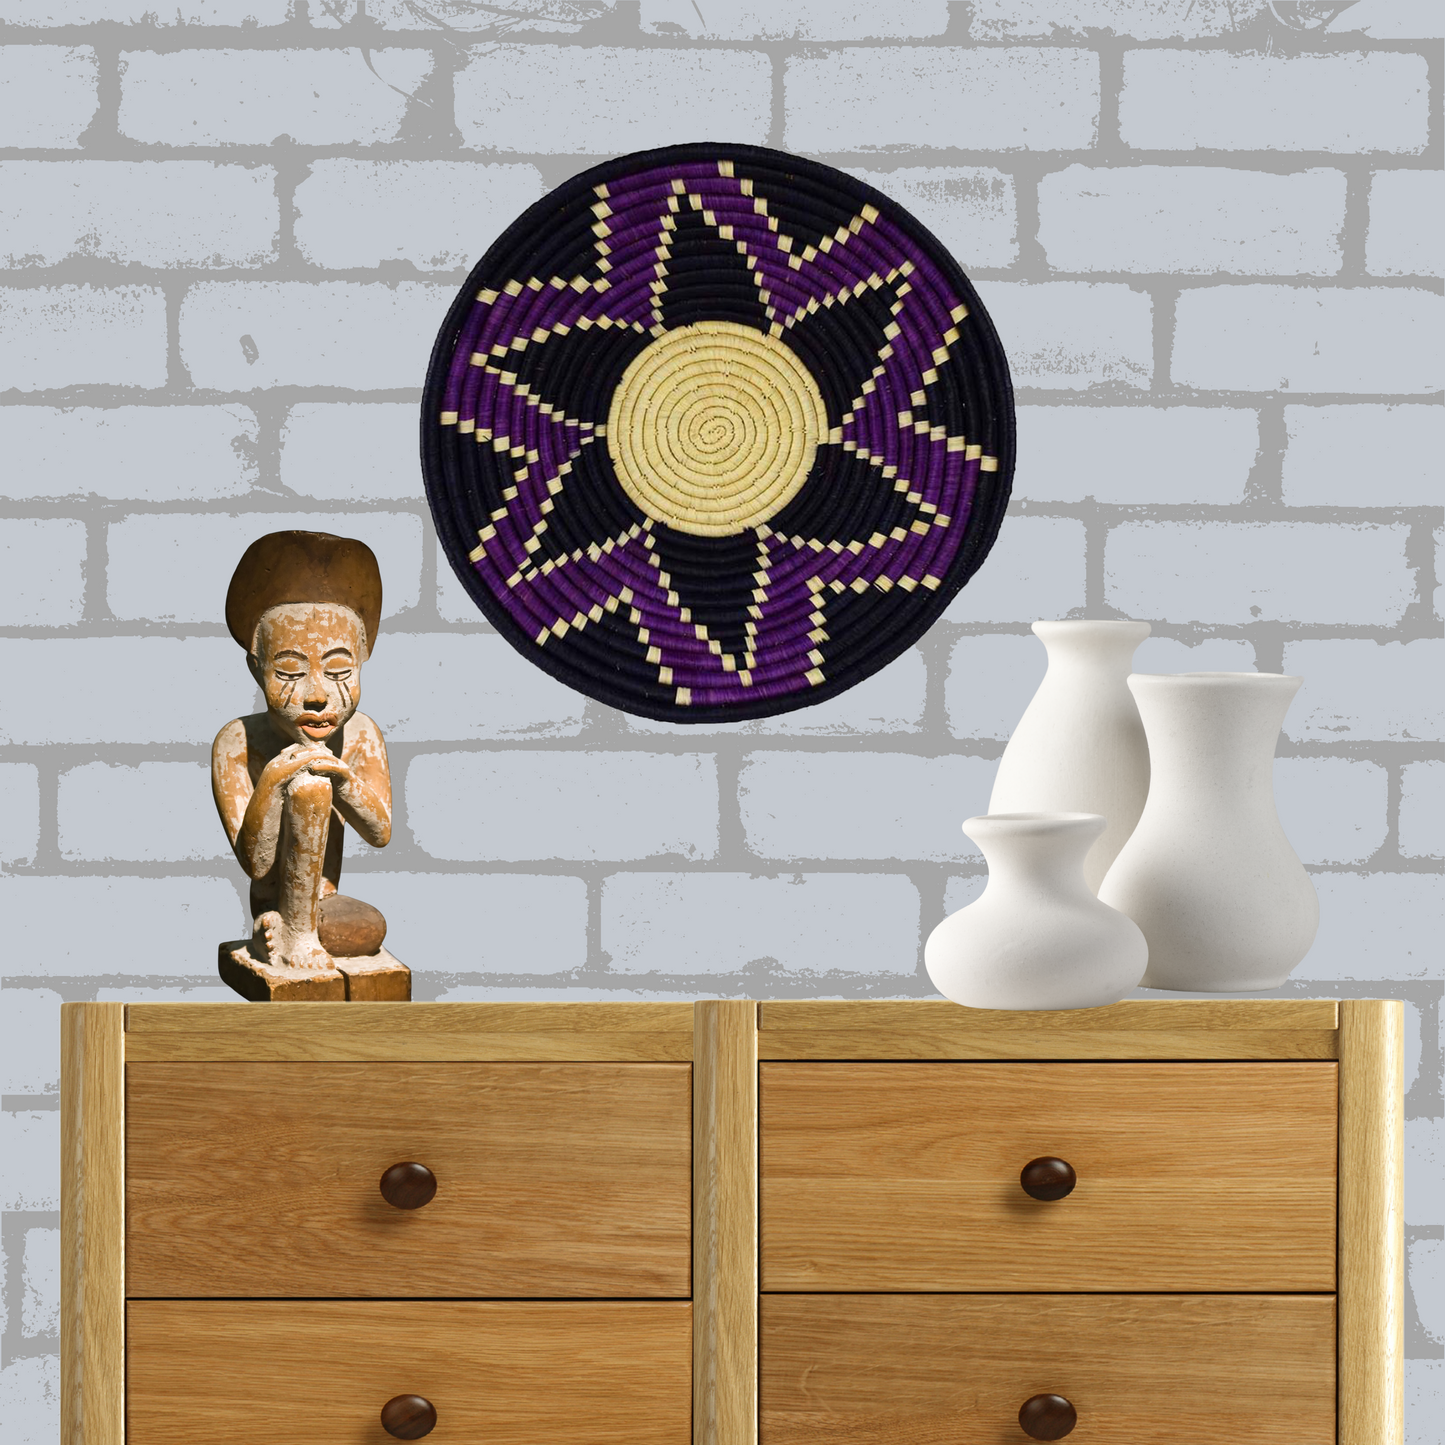 Fire Sale! Purple and Navy Burst Design Fruit or Display African Basket Handwoven Home Decor